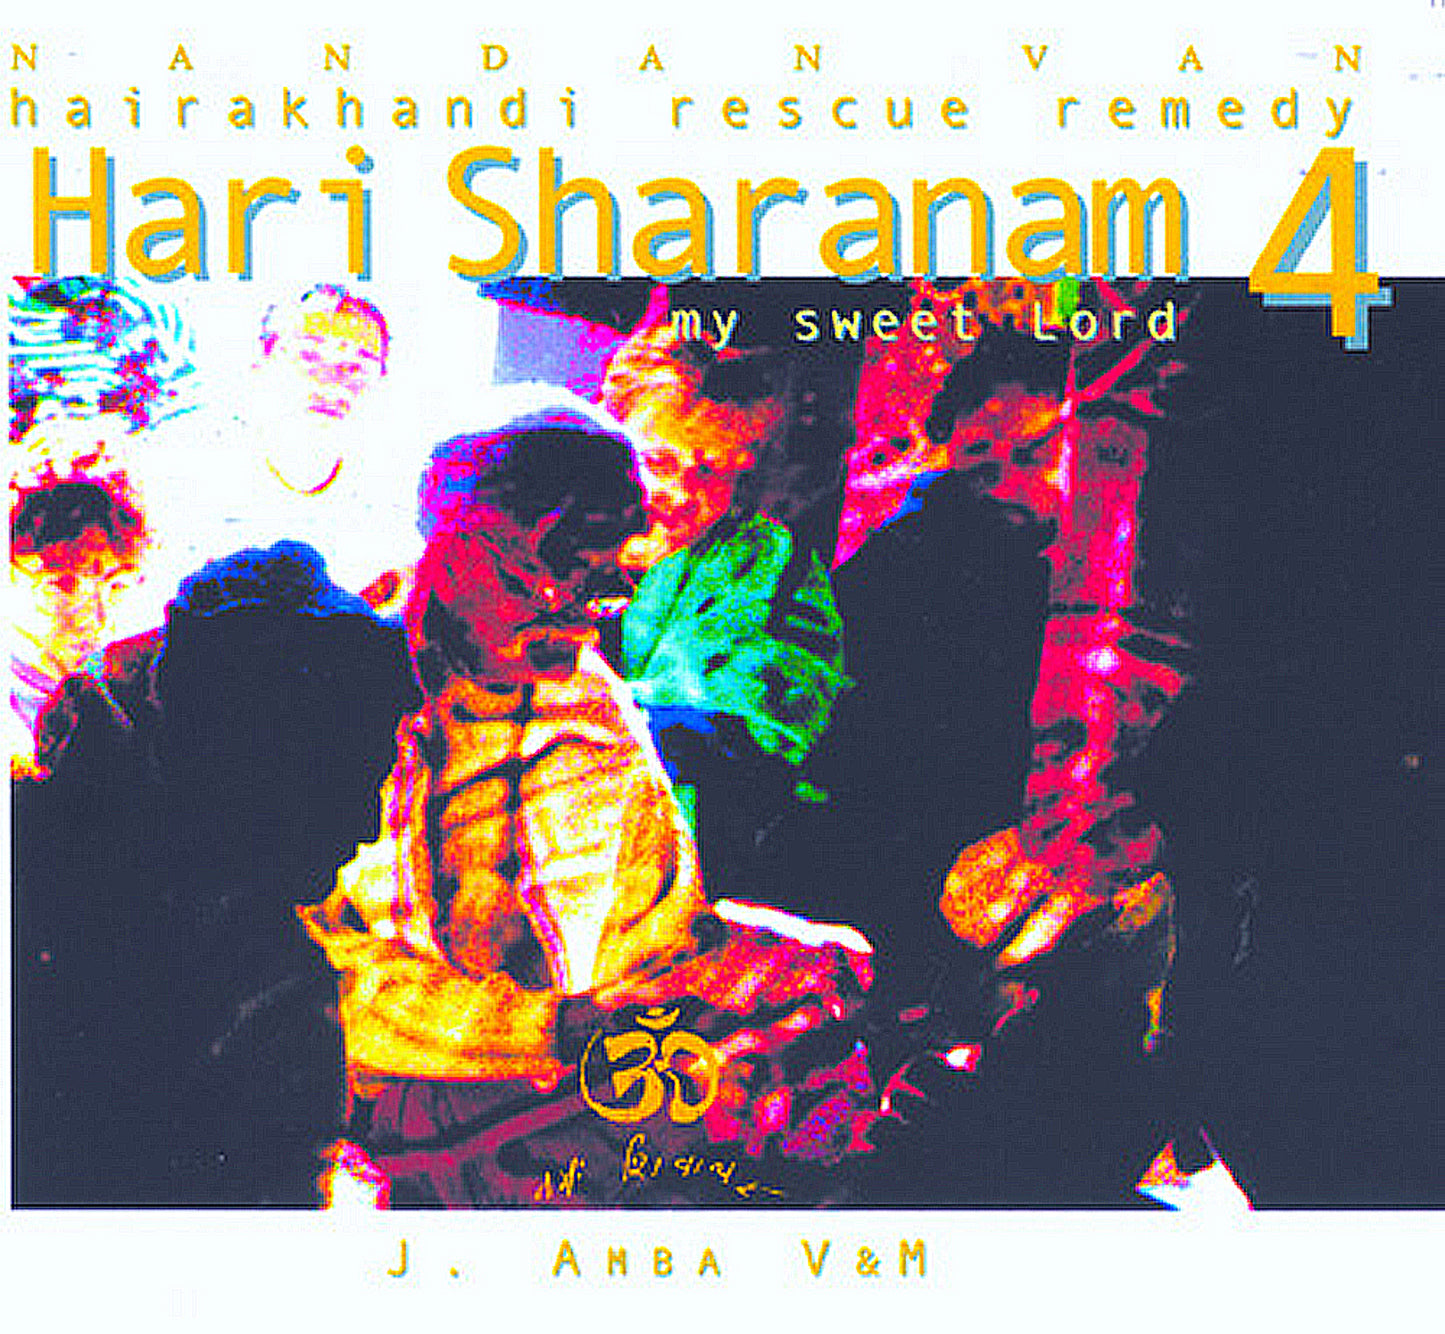 Hari Sharanam, My Sweet Lord, Bhajans - Hairakhandi Rescue Remedy 04 - Hindu Sanatan Dharma Spirituality Music Therapy for Meditation